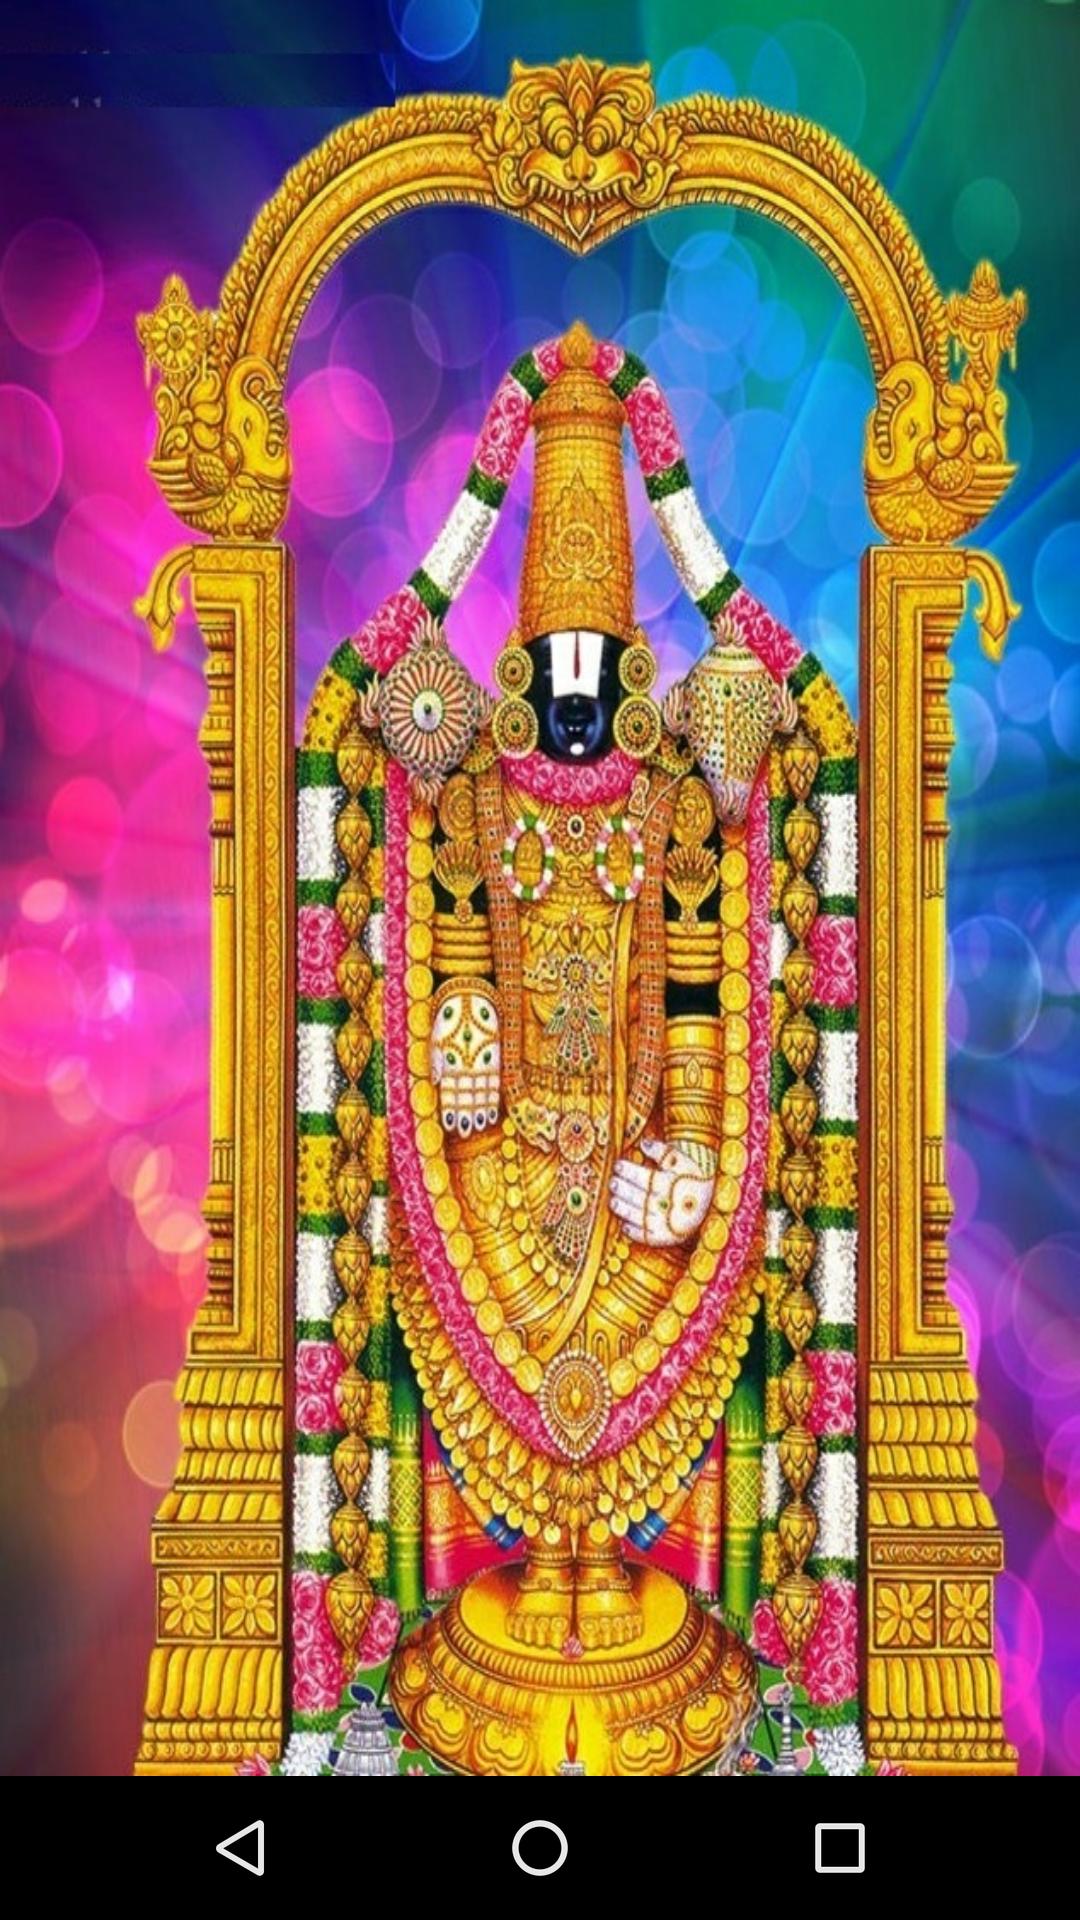 Tirupati Balaji Wallpapers Images Hd For Android Apk Download